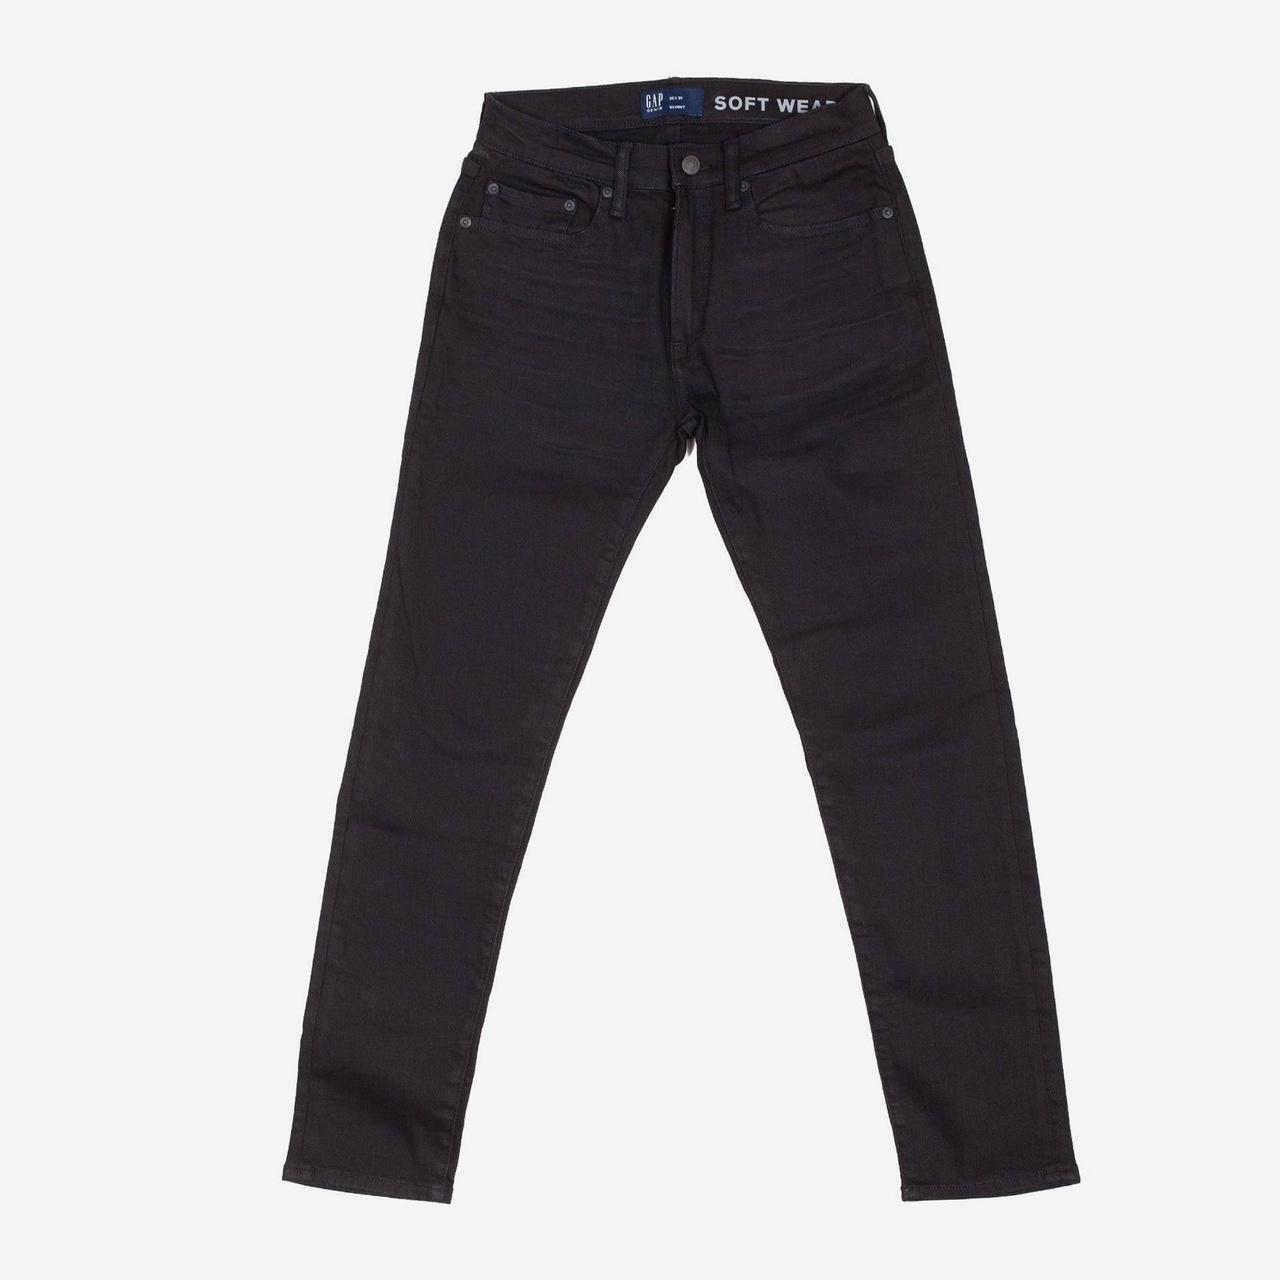 Gap black skinny jeans 29 X 30. Pretty comfortable, - Depop